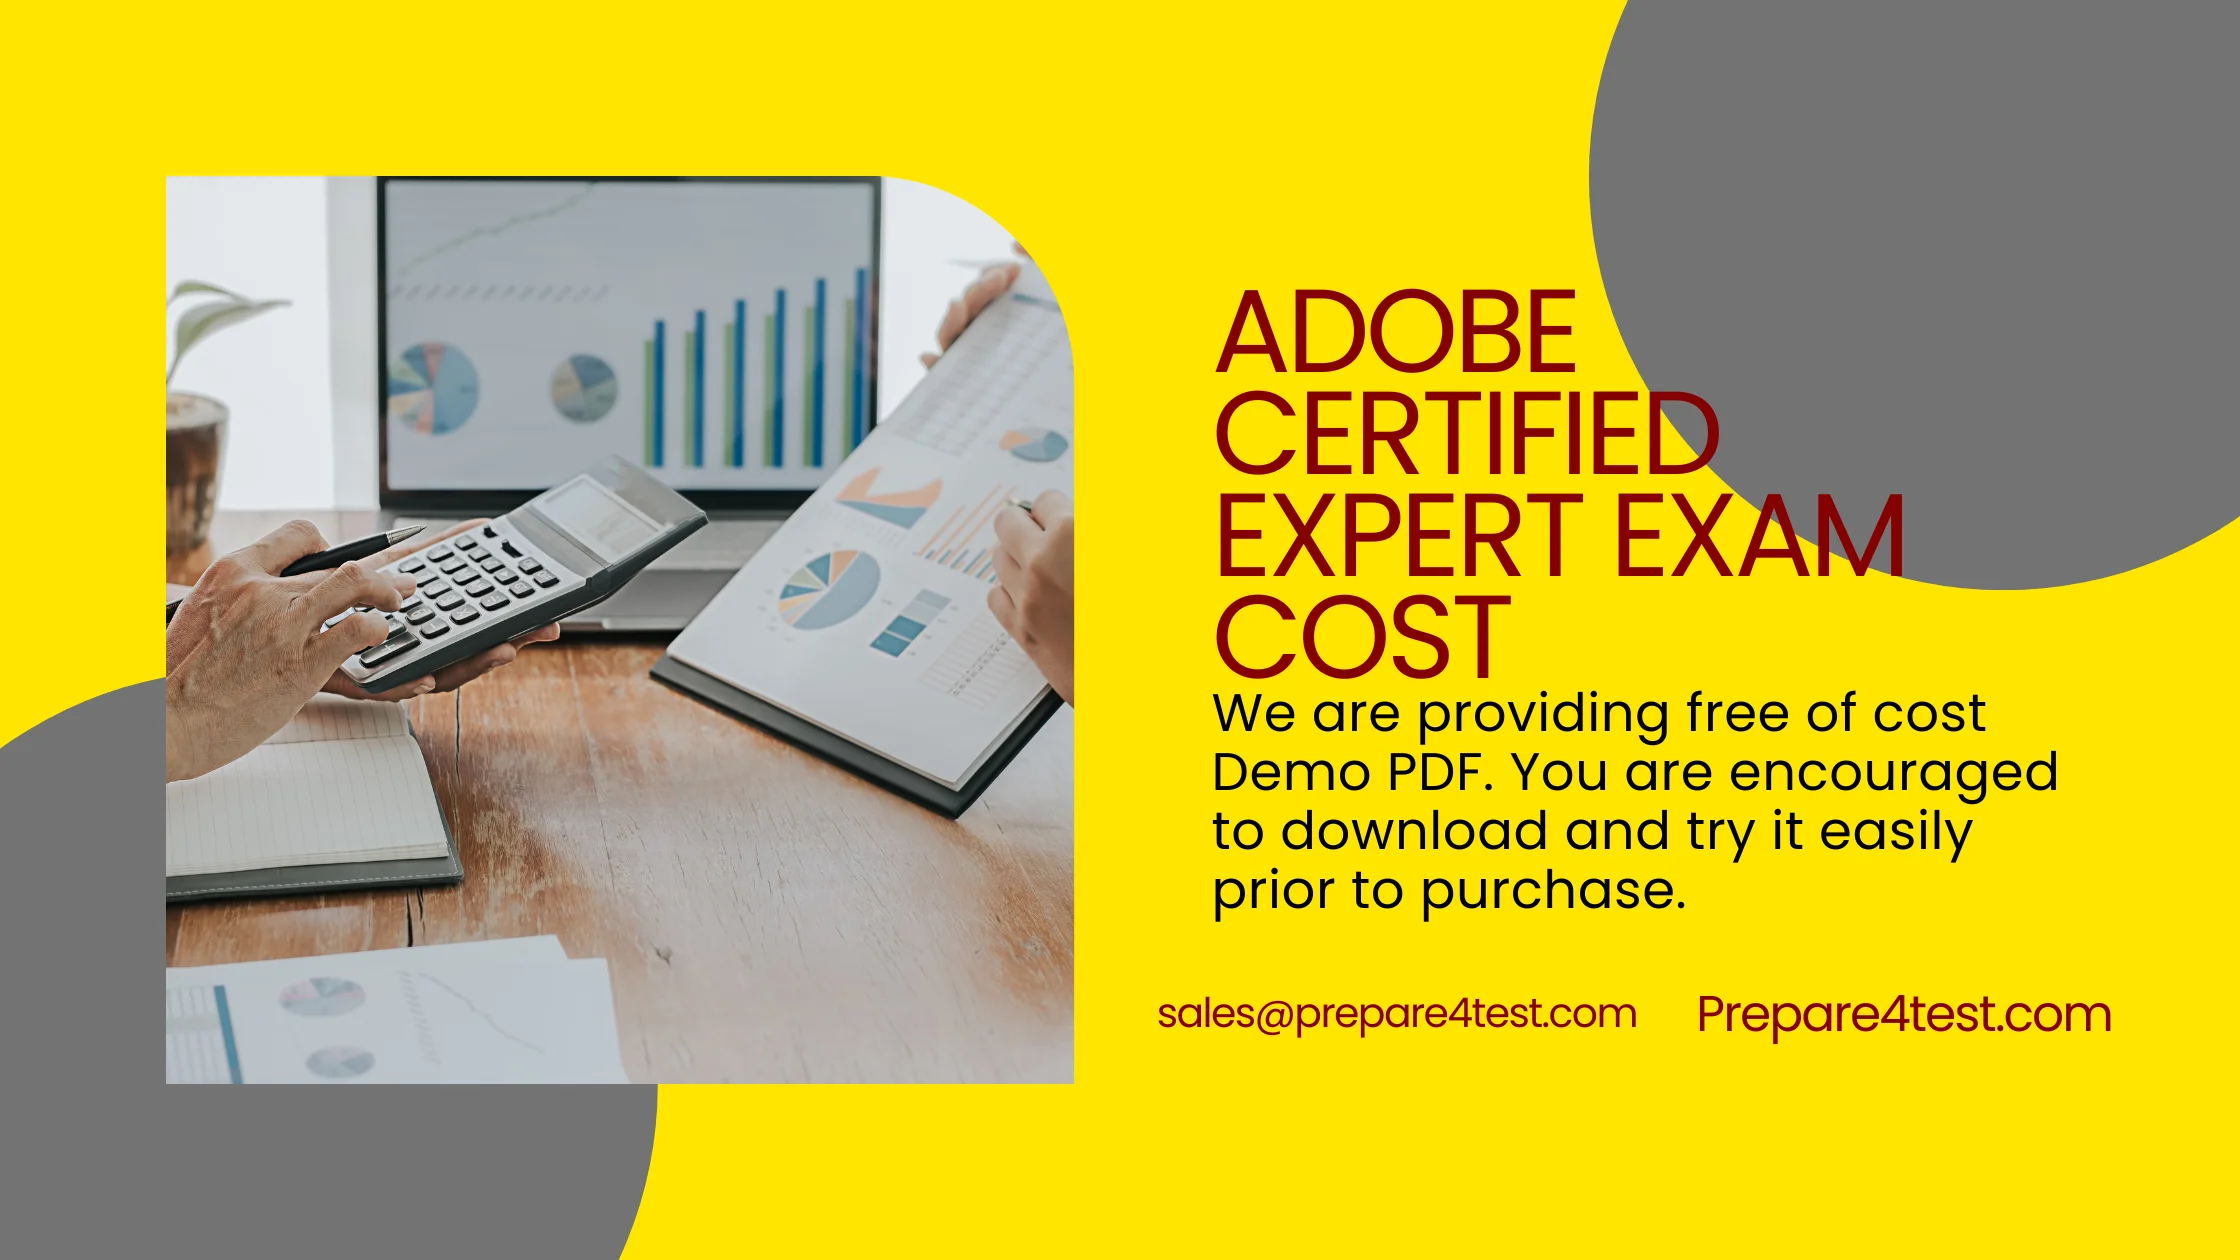 Adobe Certified Expert Exam Cost Guarantee